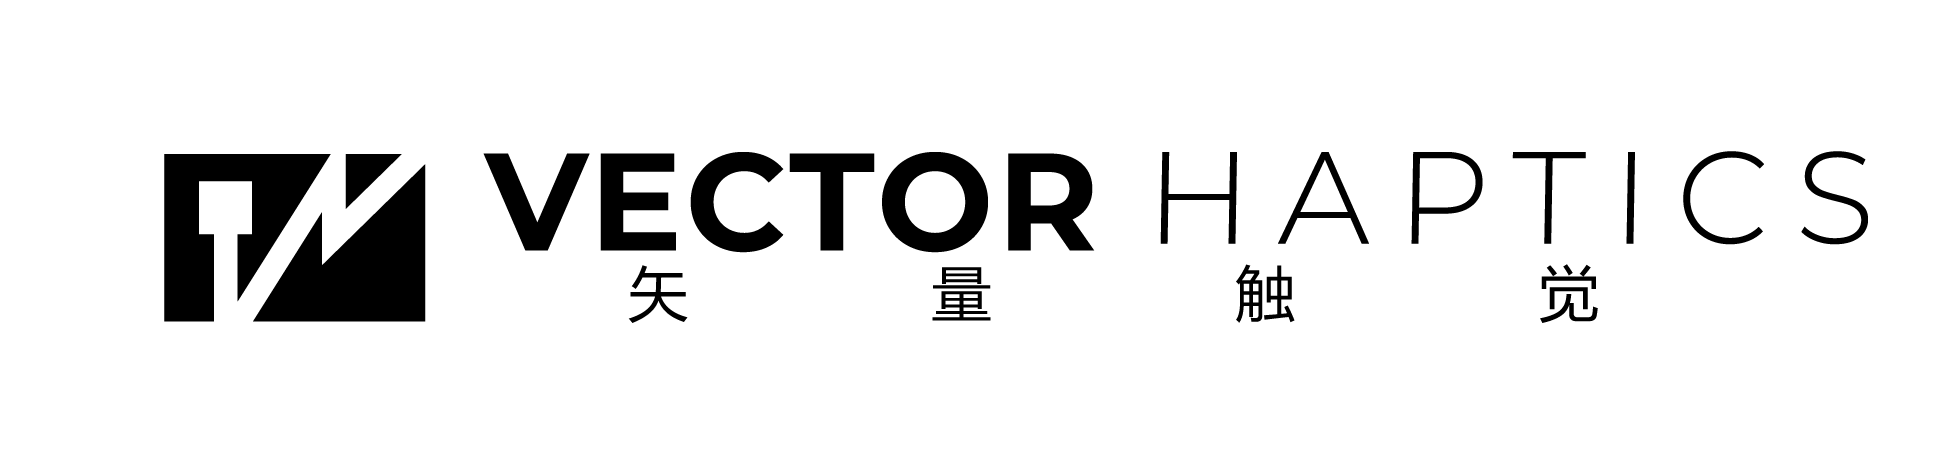 Vector Haptics logo